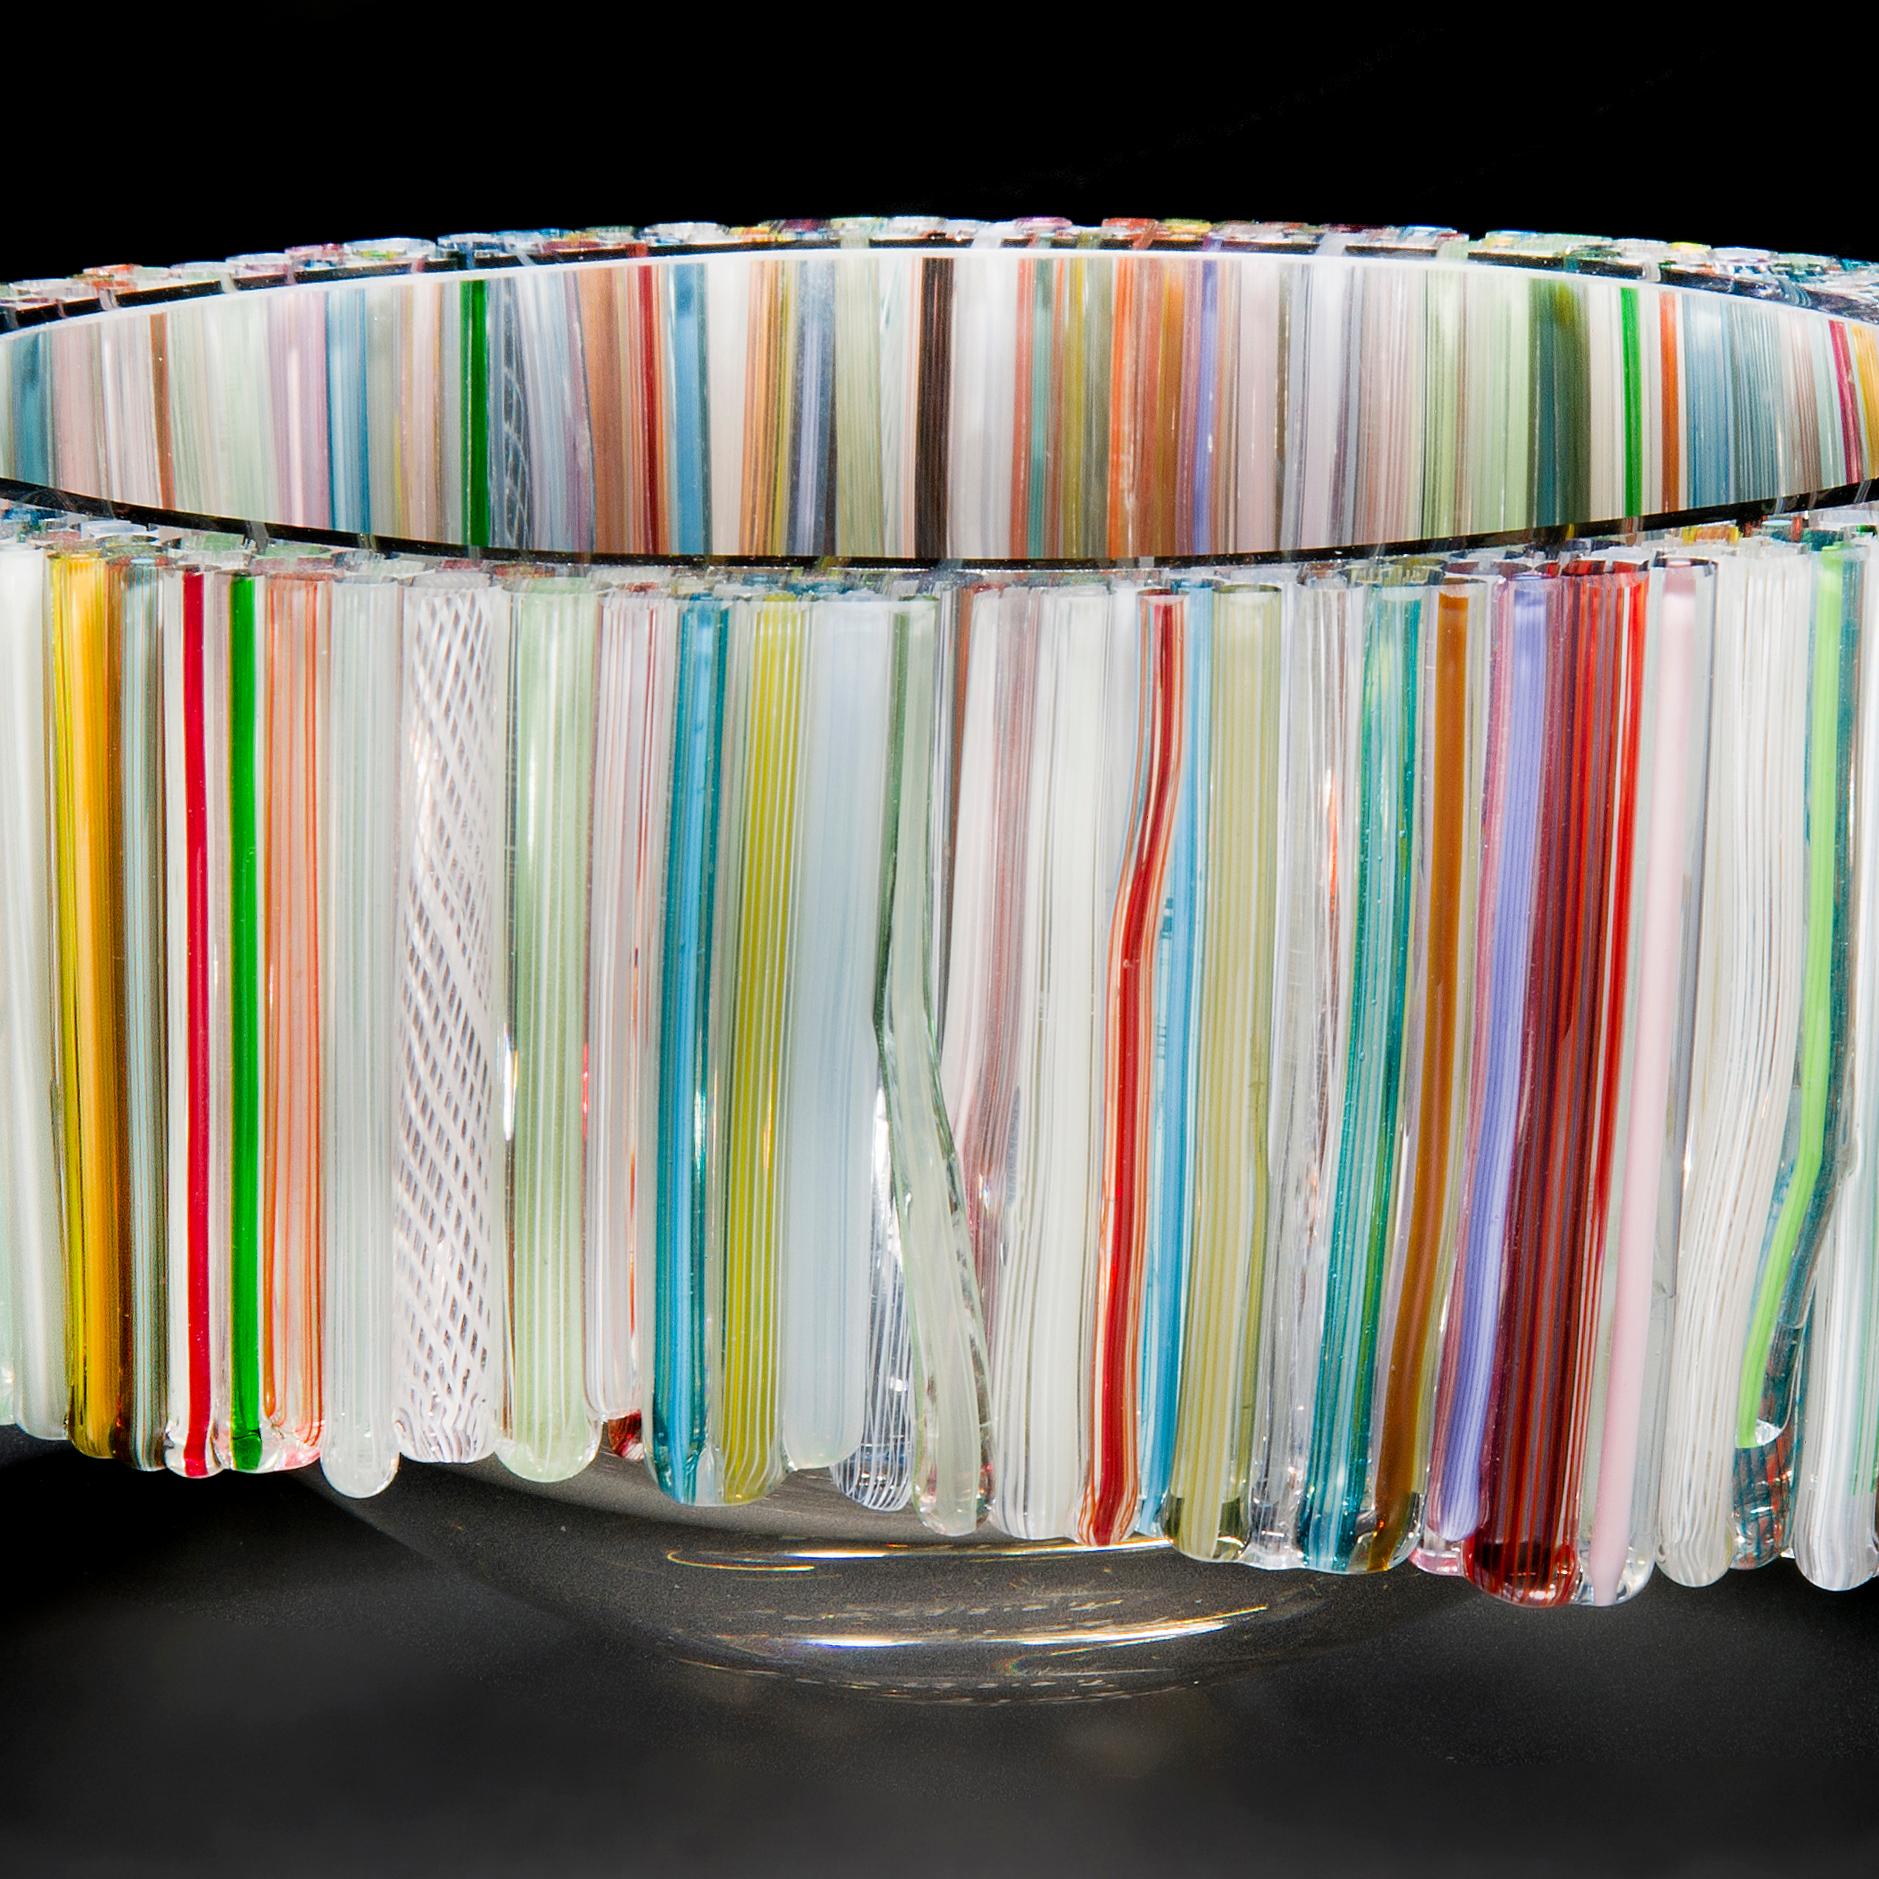 Contemporary Thread Turmaline, a unique mixed colour glass centrepiece by Sabine Lintzen